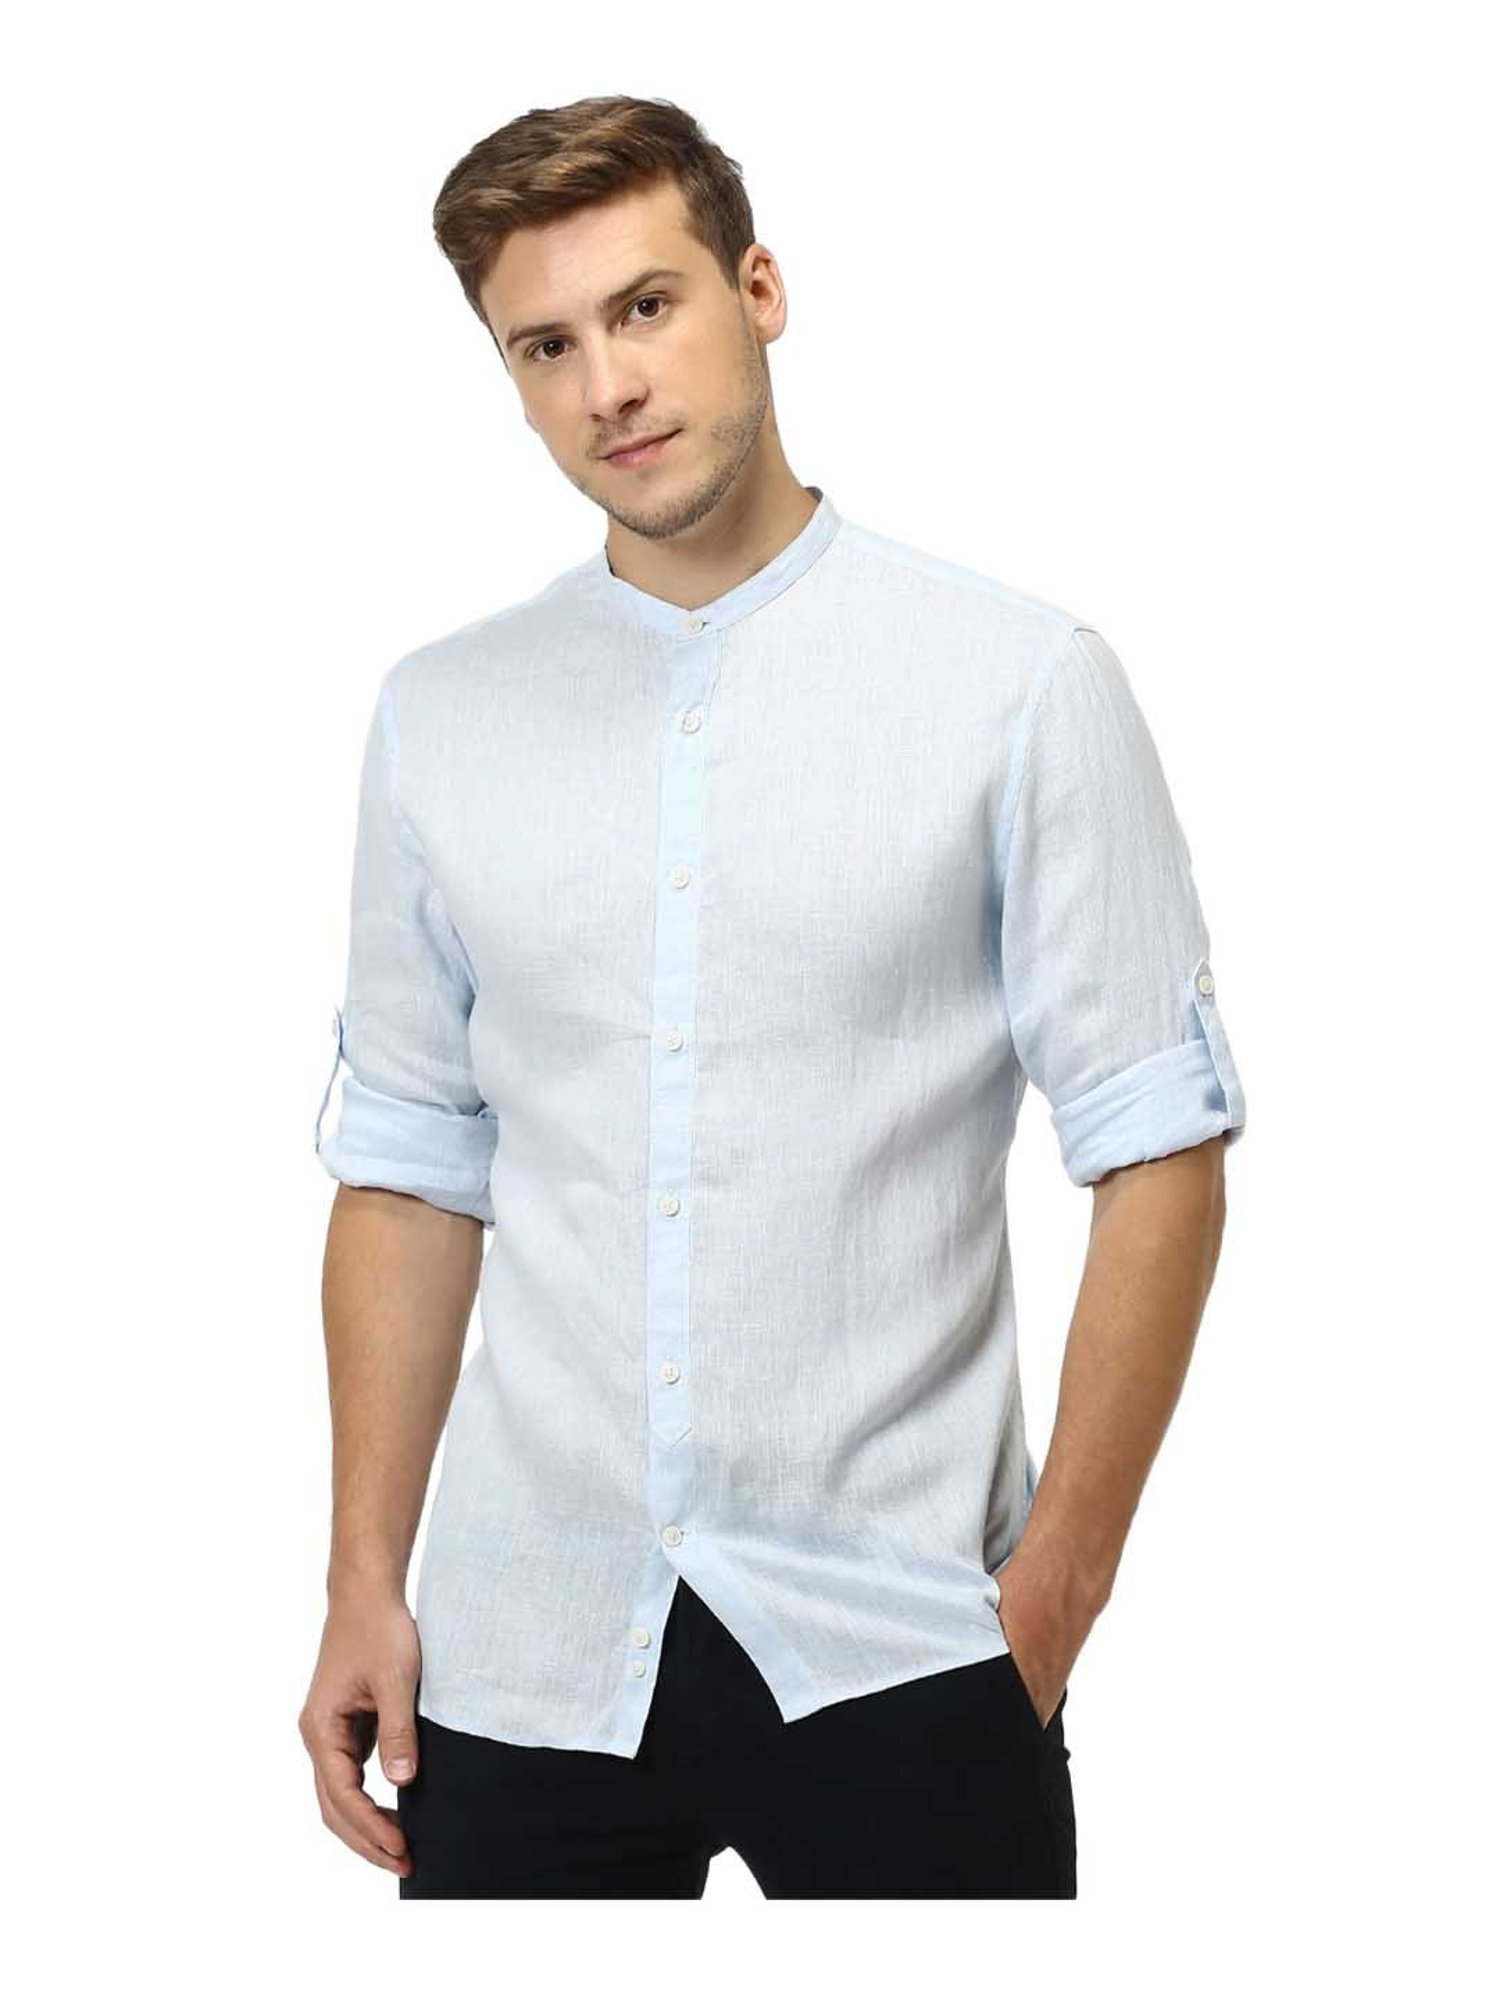 celio* Light Blue Regular Fit Mandarin Collar Linen Shirt-celio ...